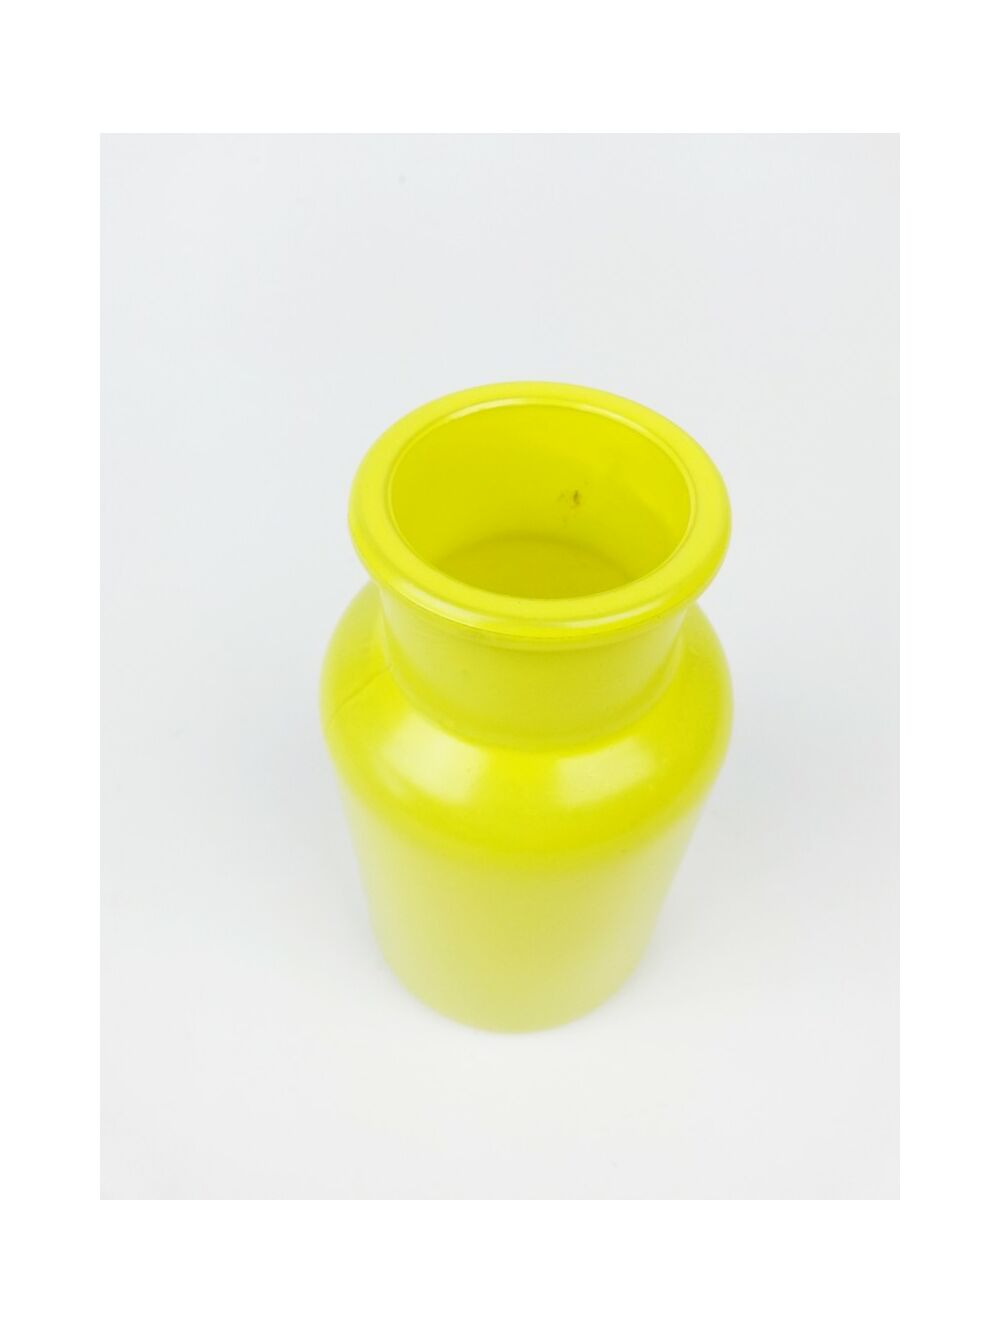 Kép 2/2 - Üveg palack nyakas - Sárga